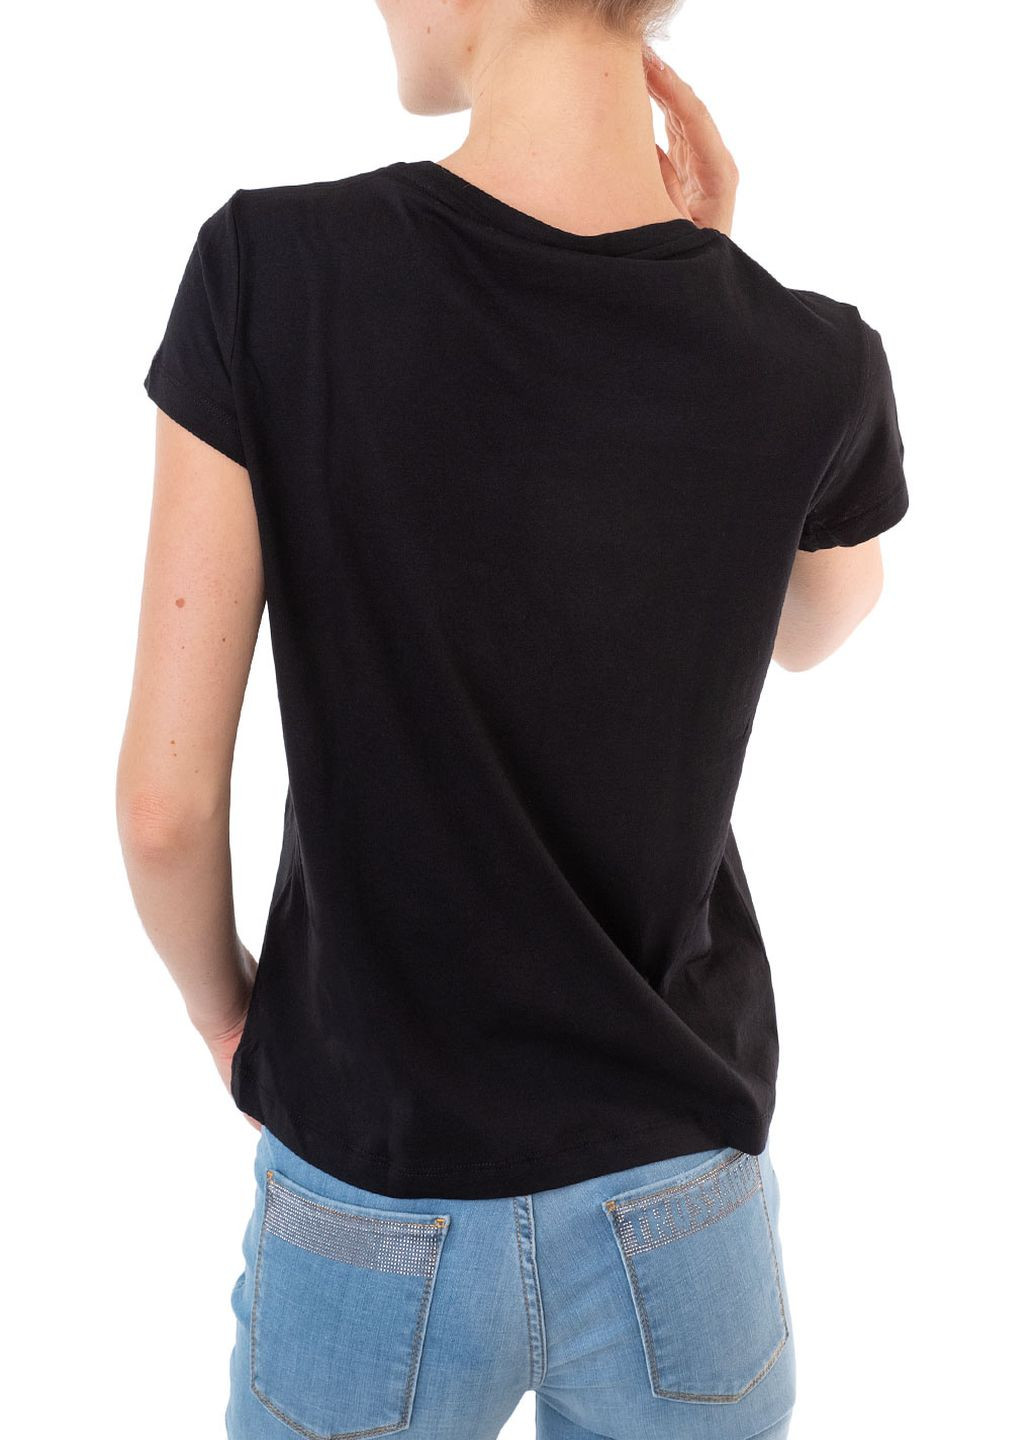 Черная летняя футболка Trussardi Jeans